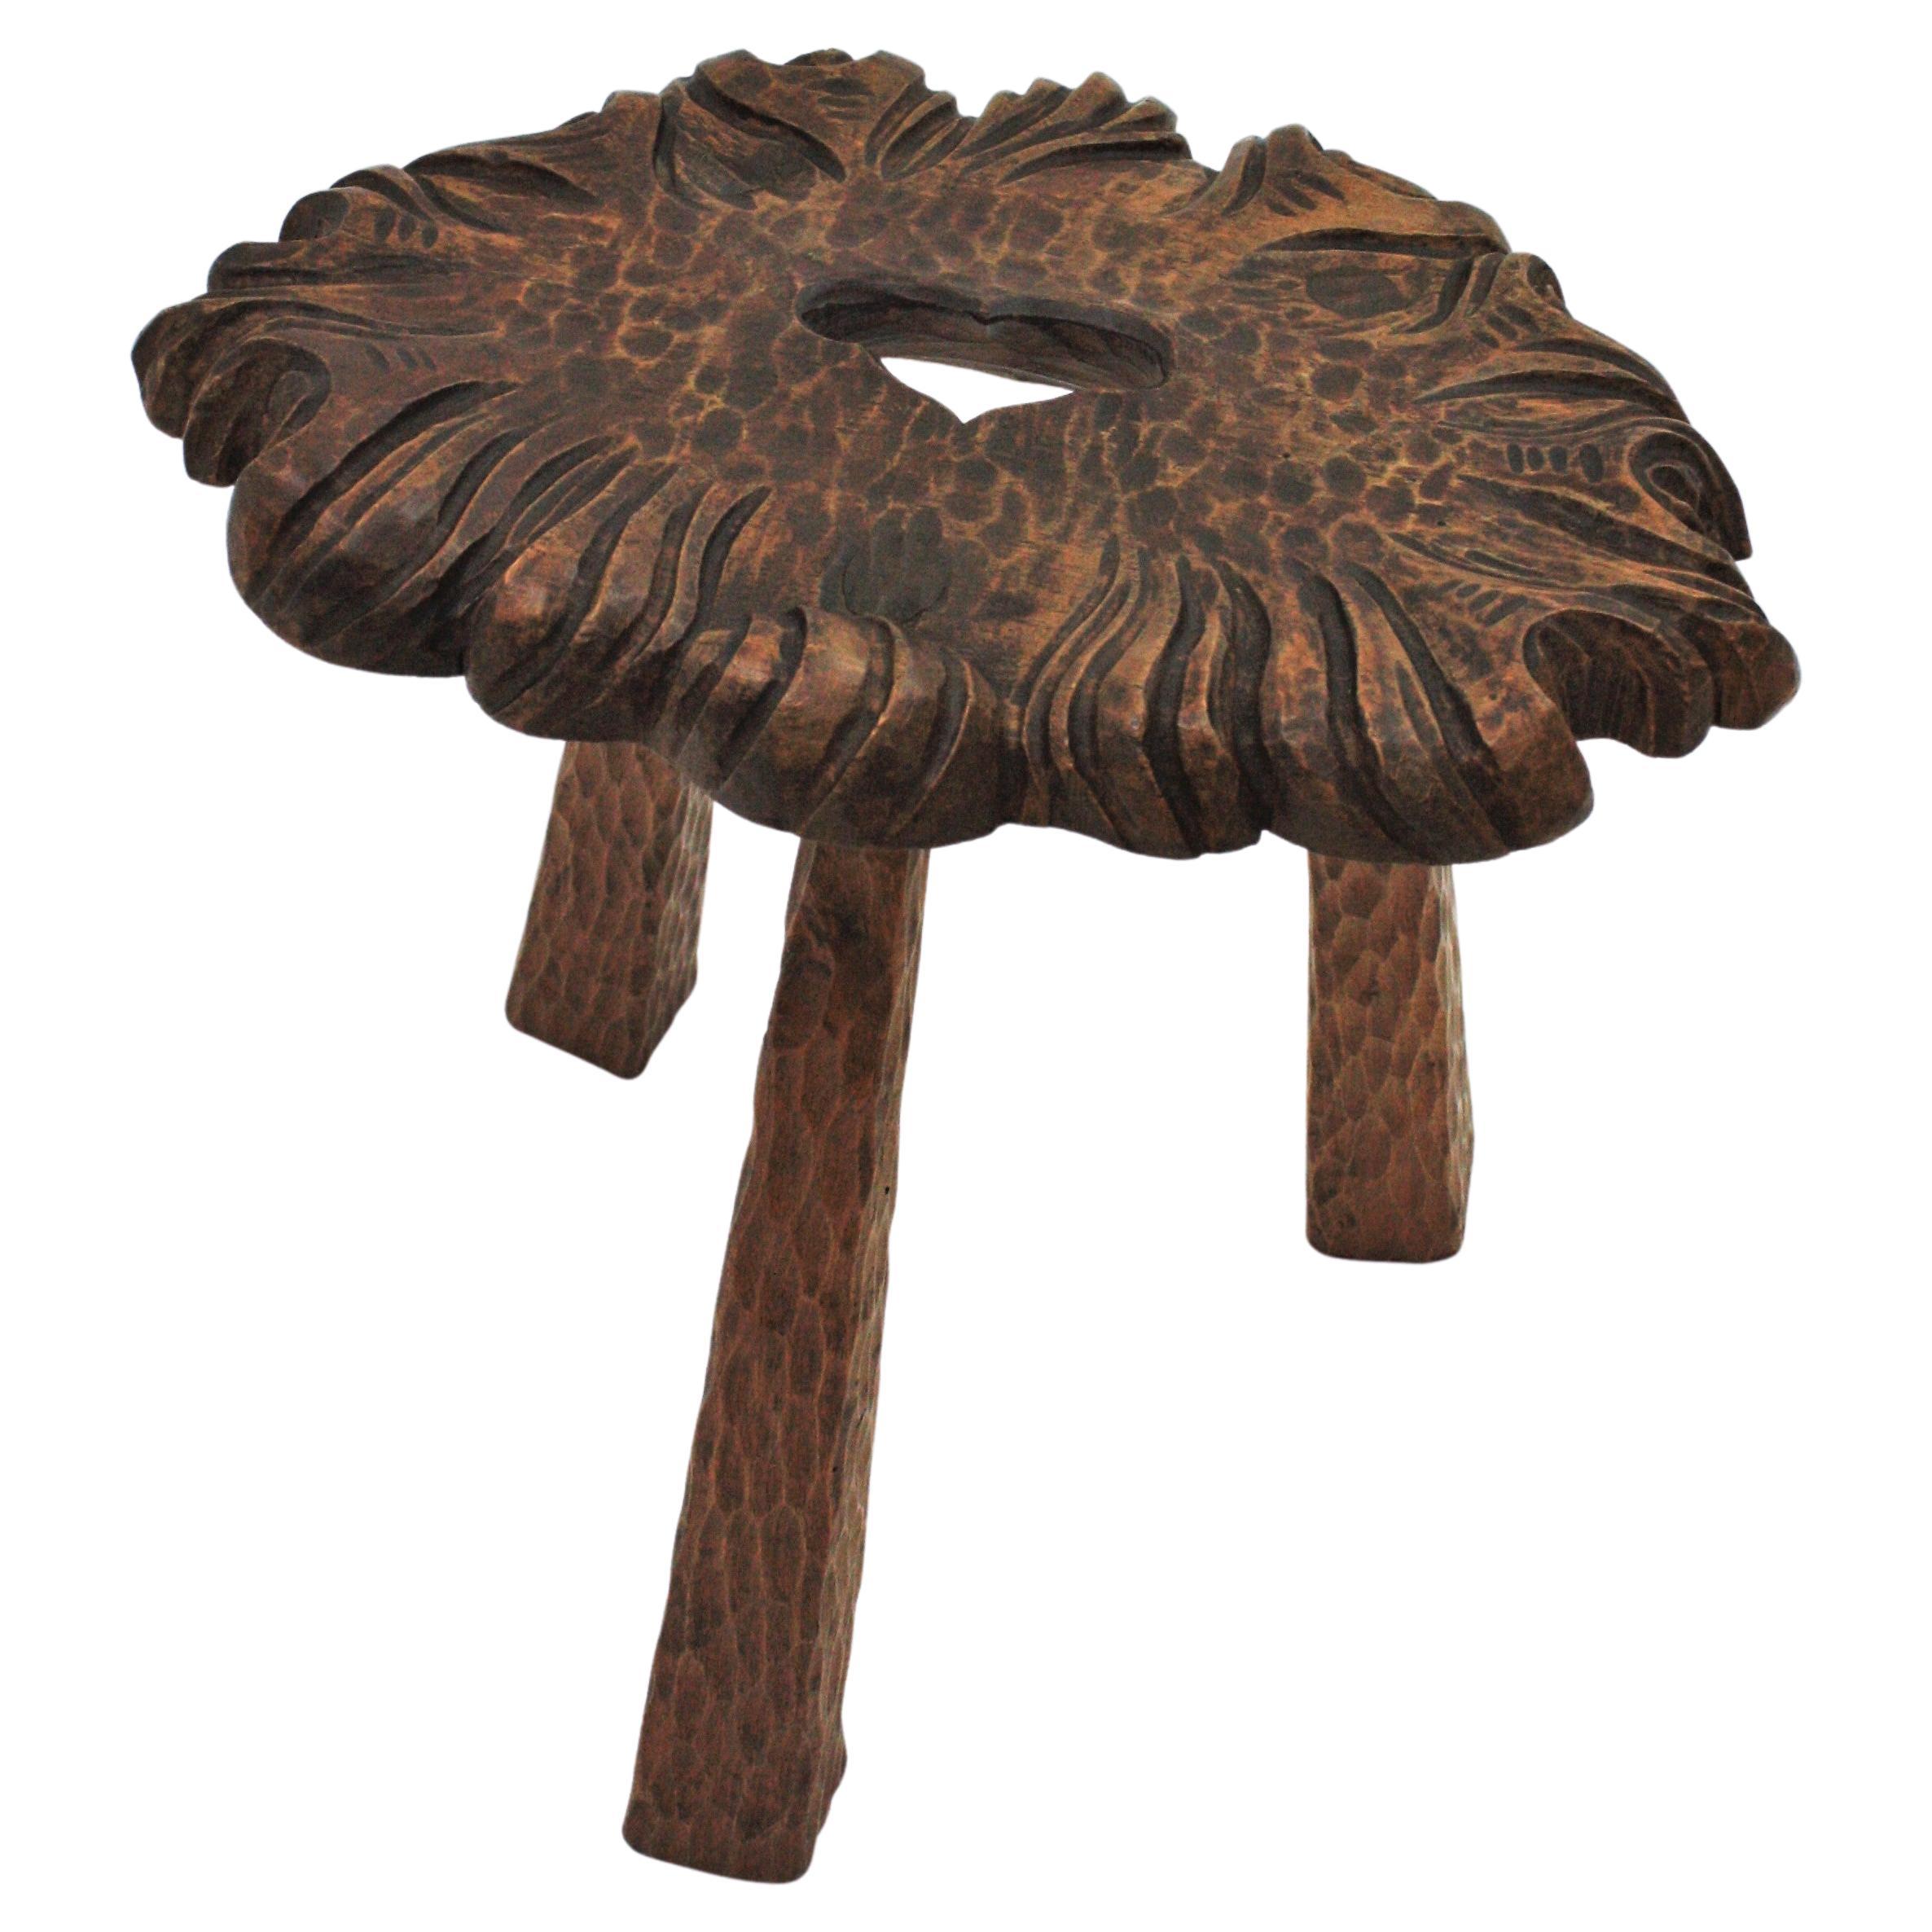 Spanish Rustic Wood Tripod Stool or Side Table